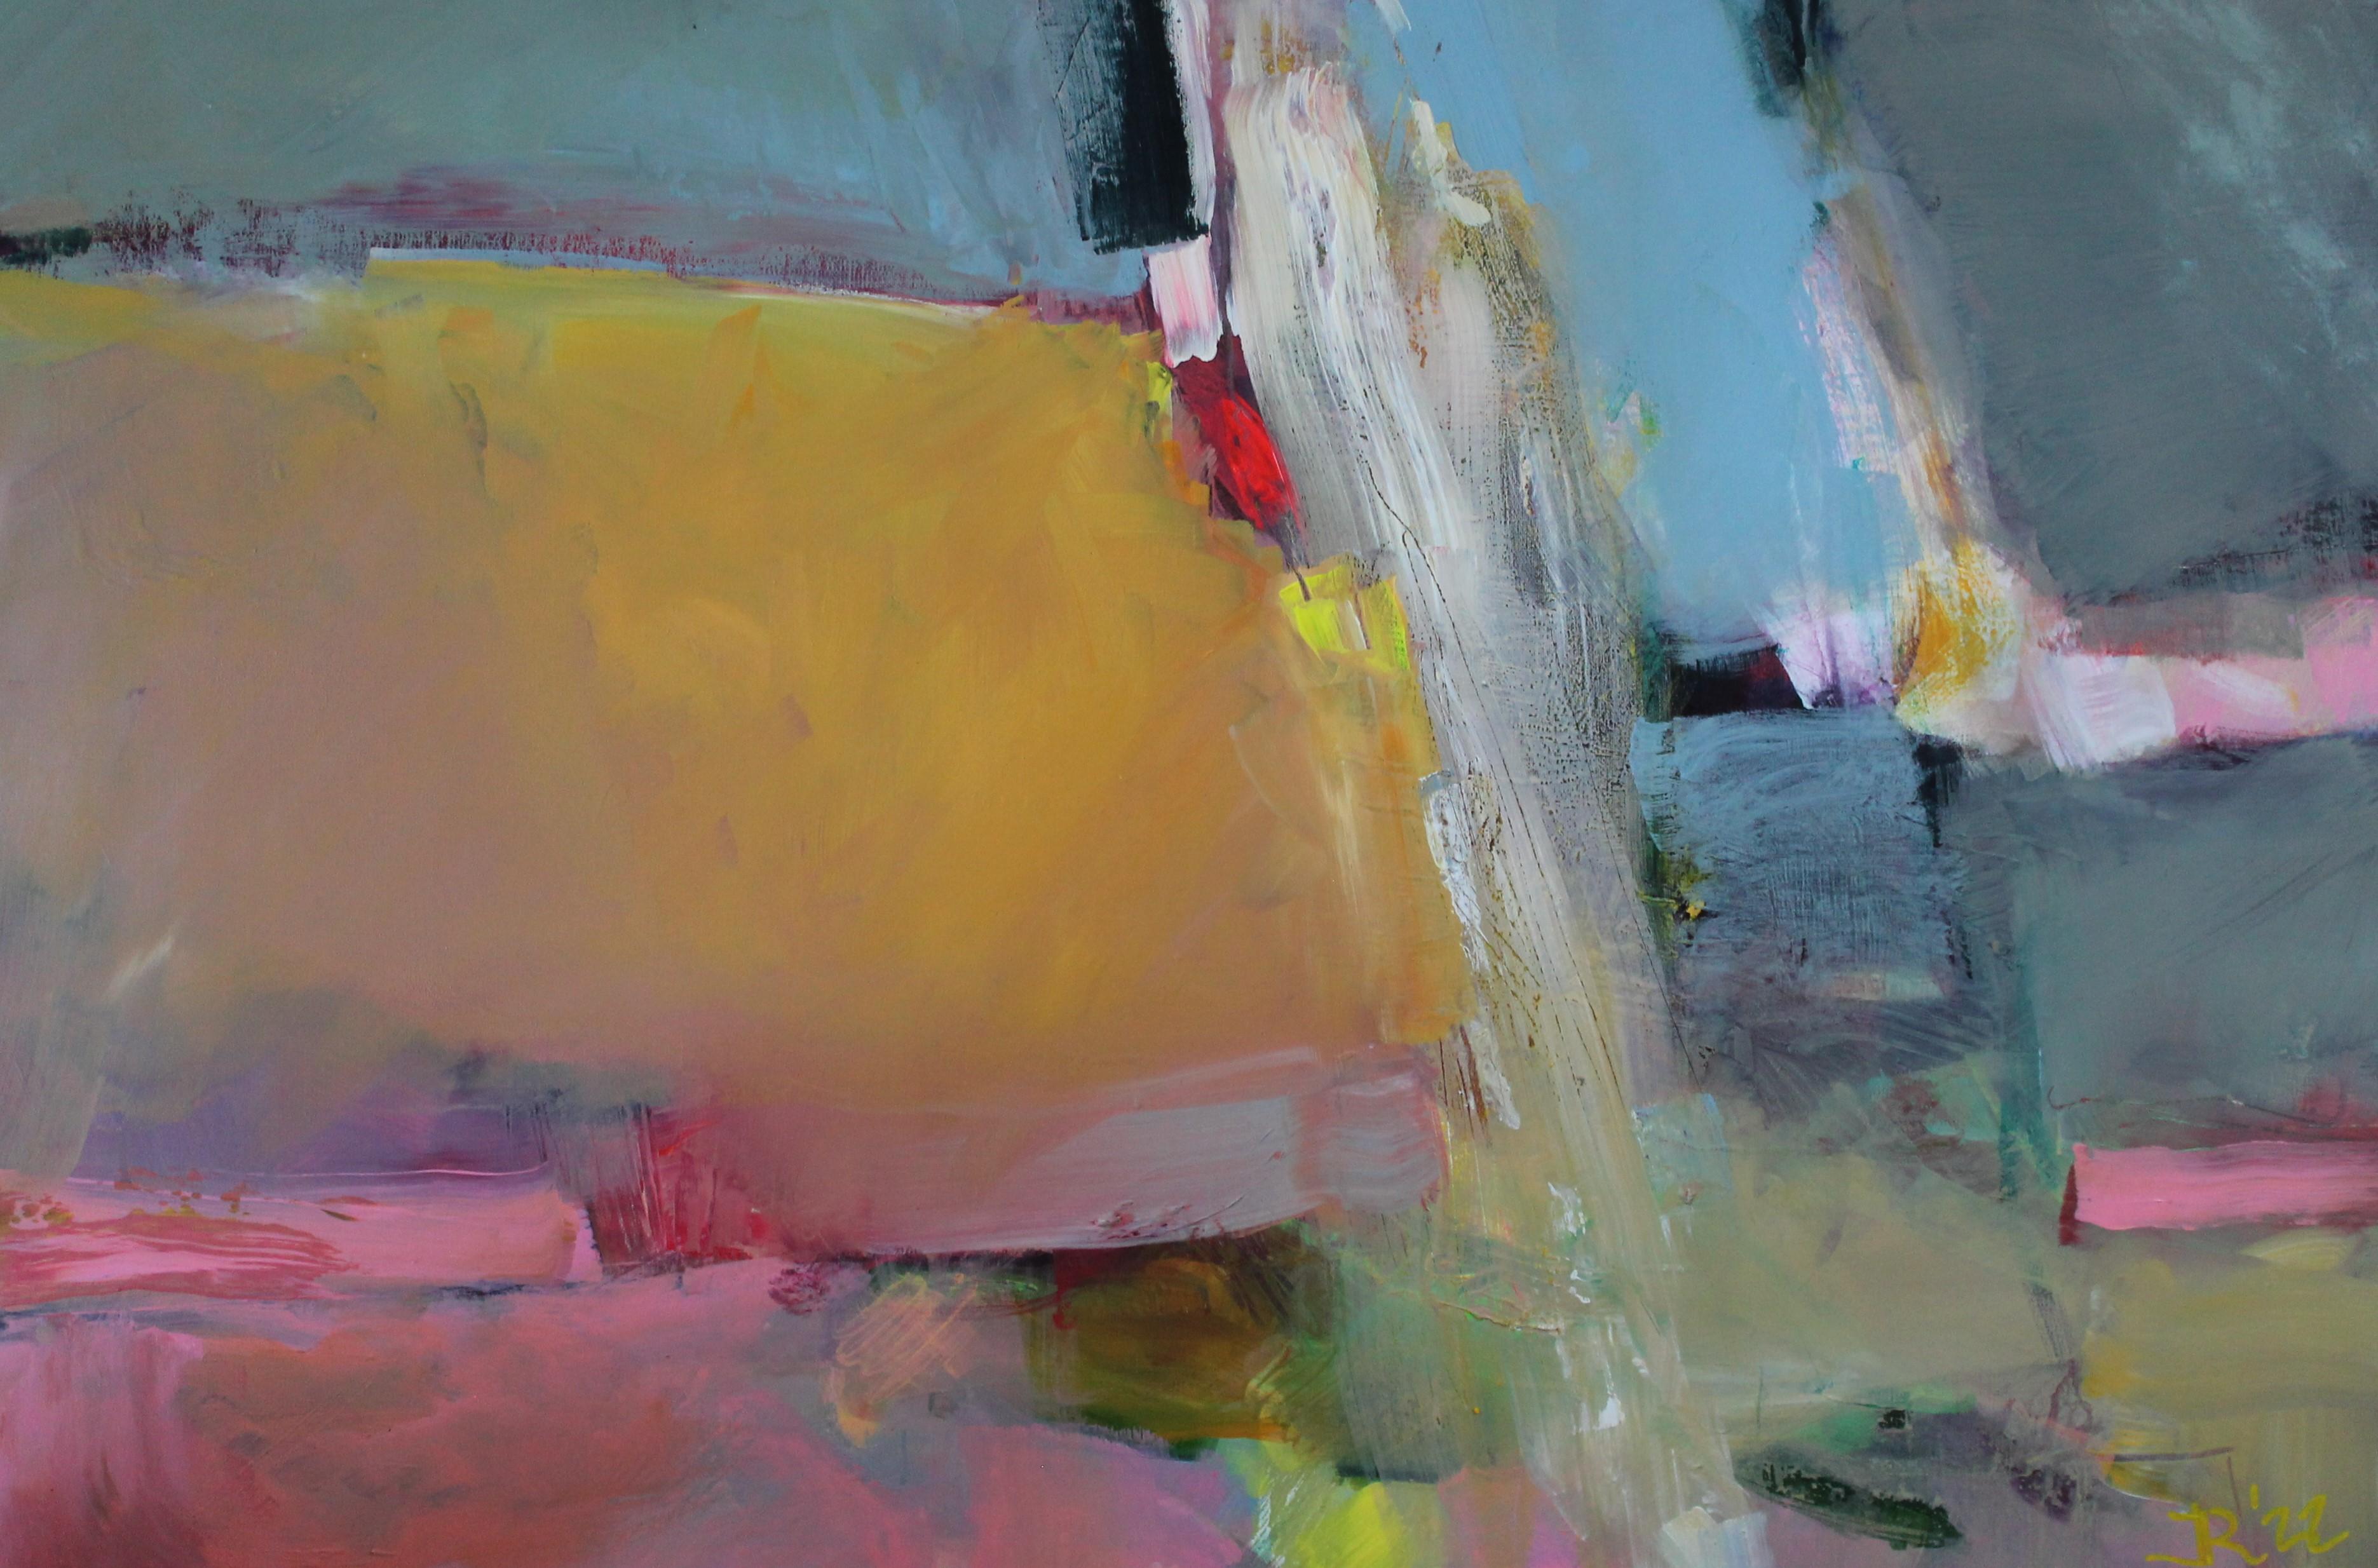 Estuary1, Abstract, Acrylic on canvas - Painting by Jon Rowland